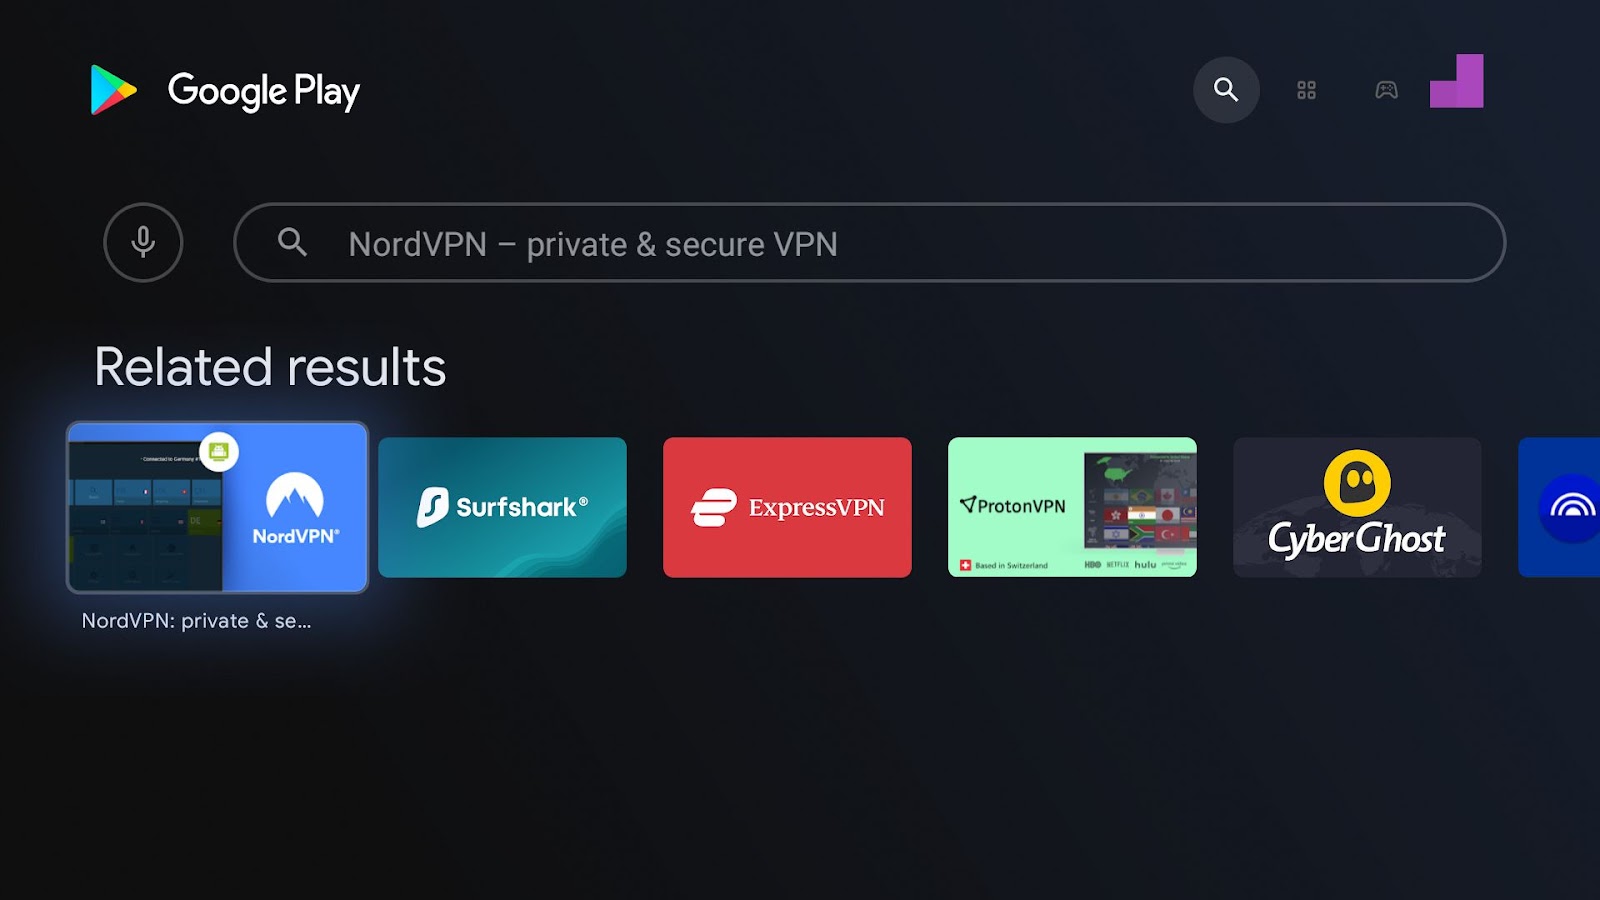 NordVPN app in GooglePlay store on SmartTV